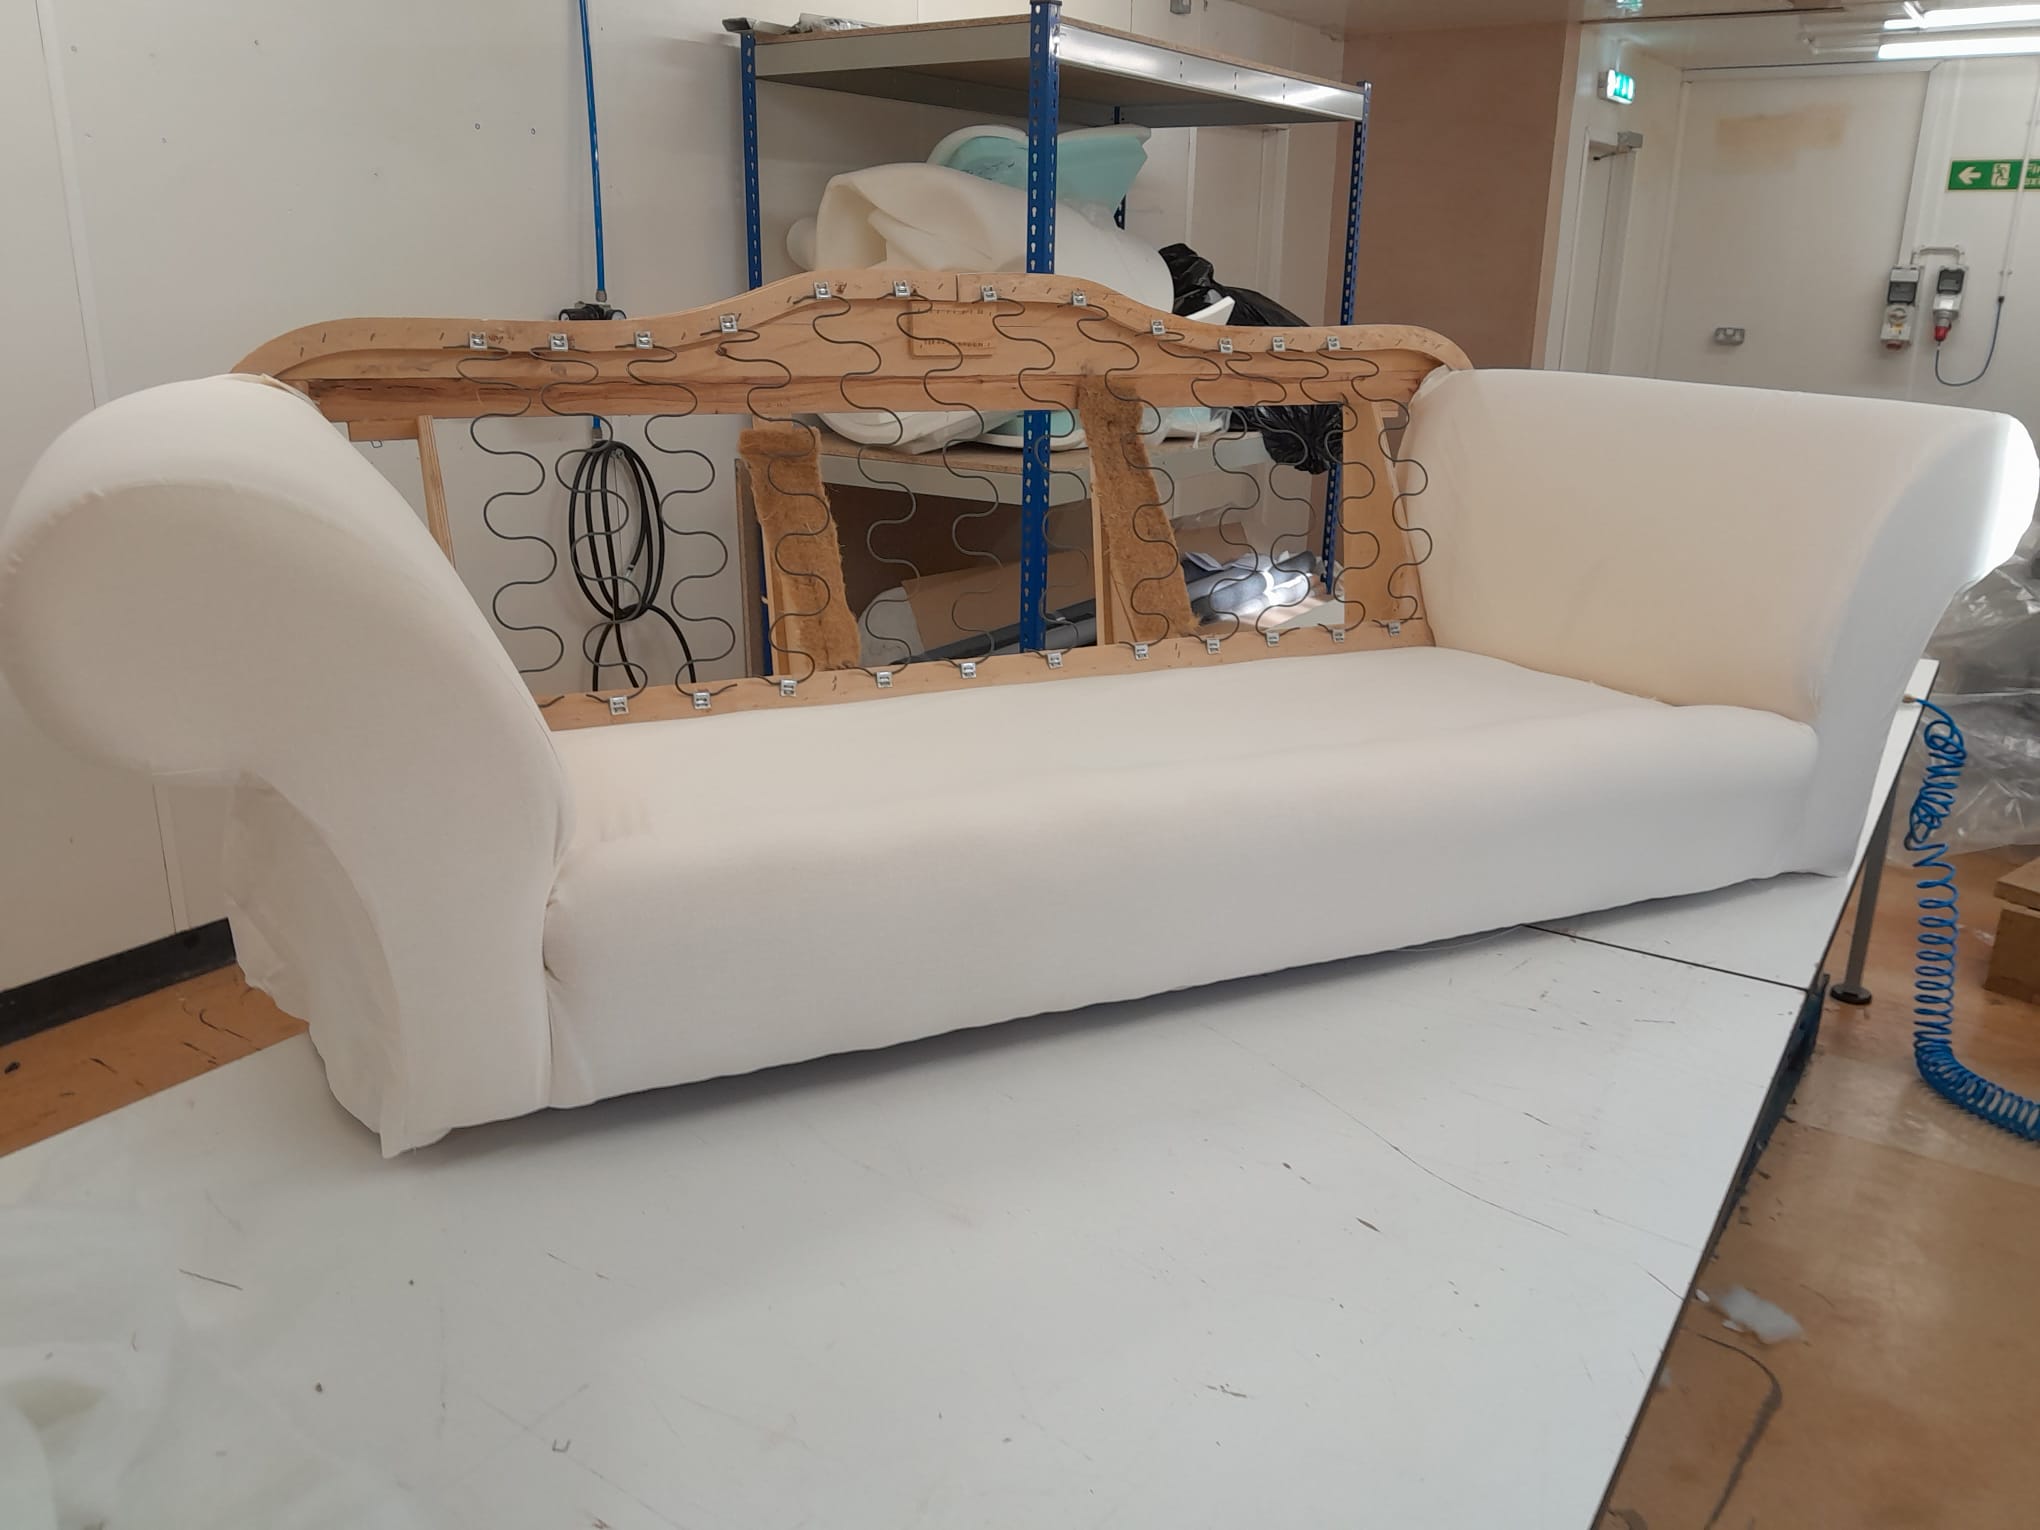 multiyork furniture upholstery replacement foam